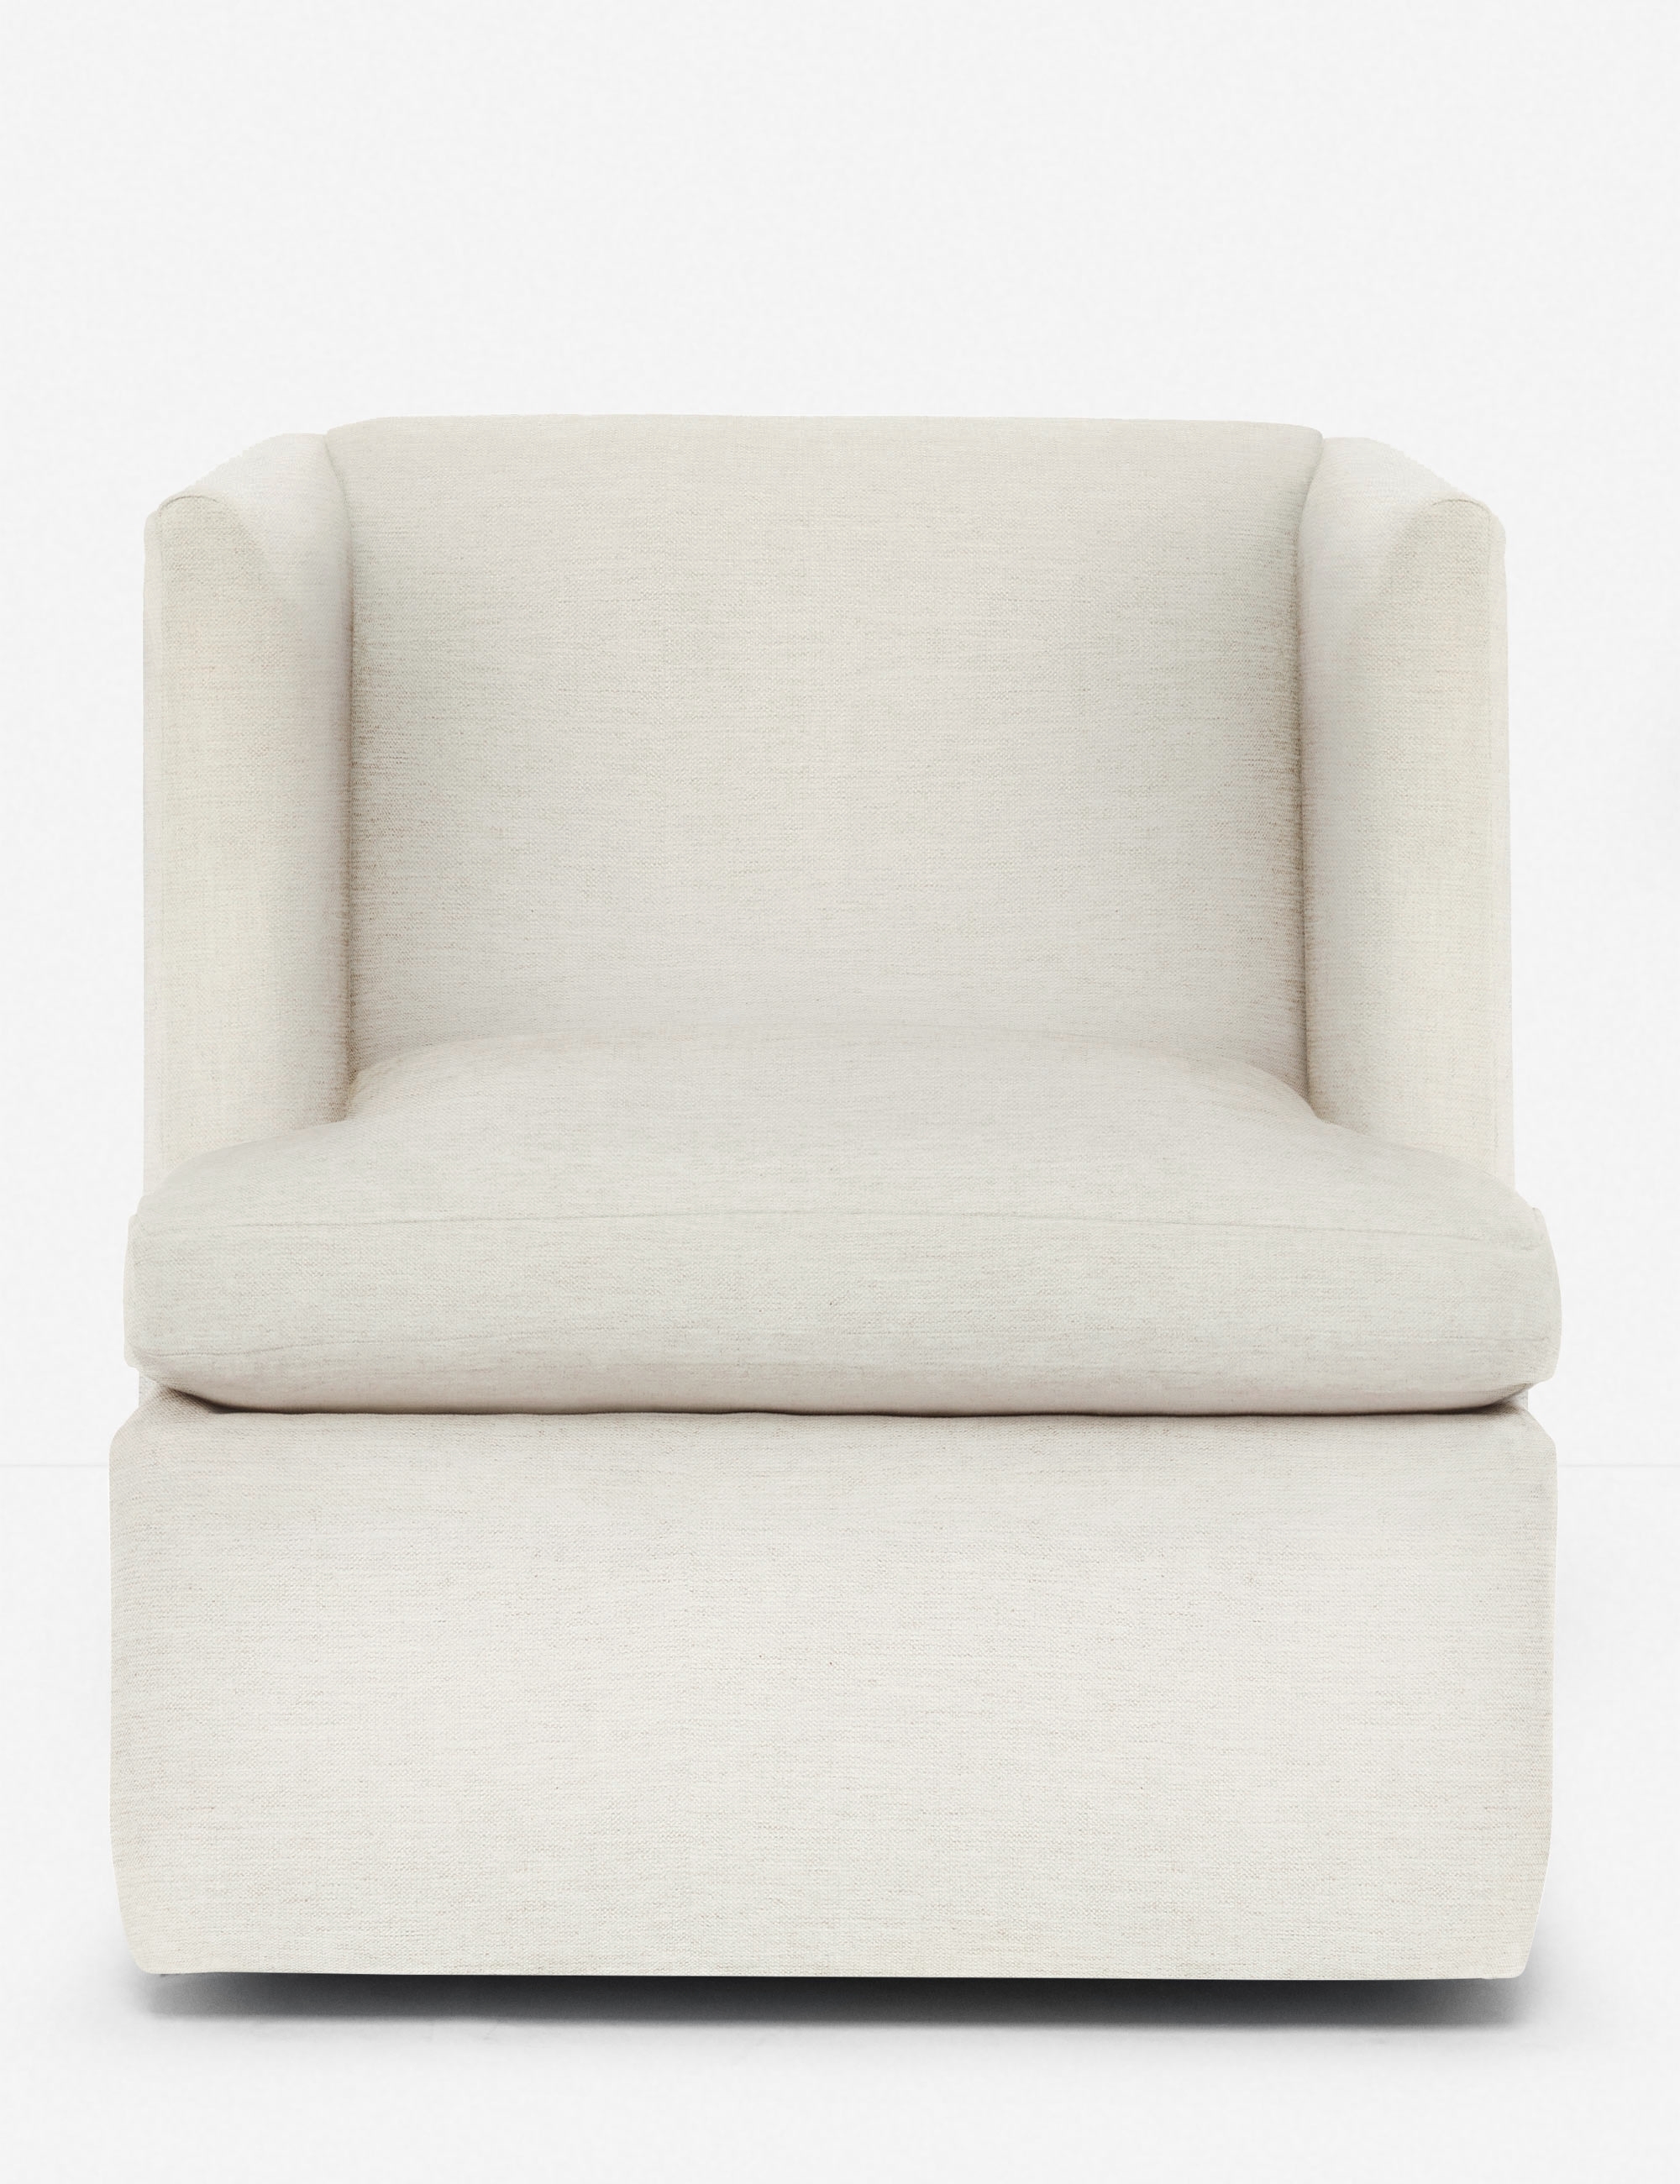 Hayden Square Swivel Chair, Sand - Image 1